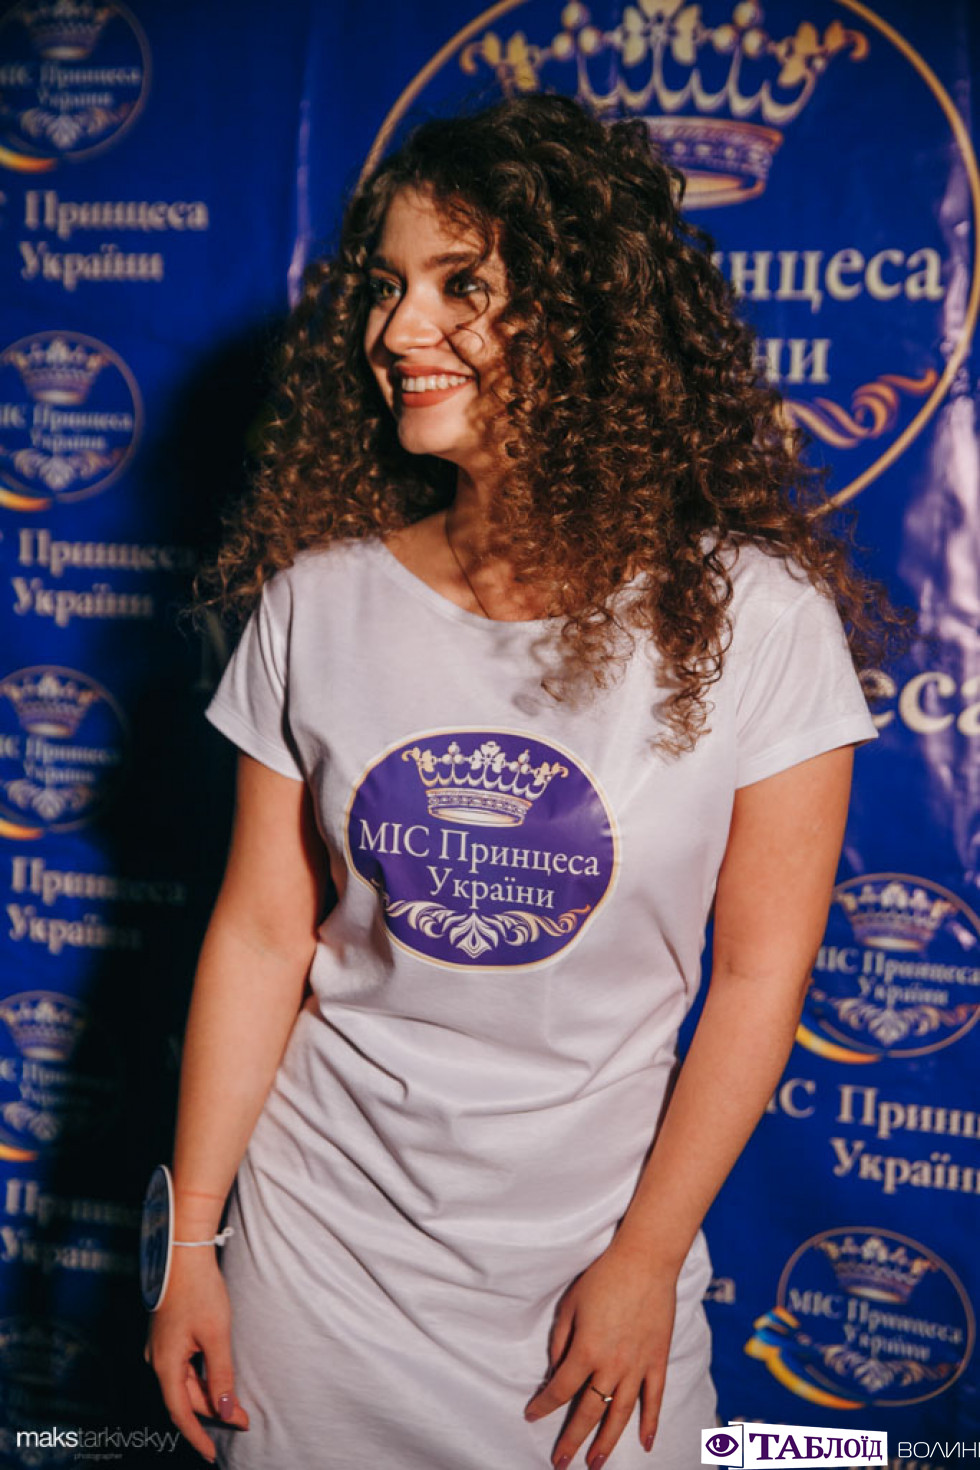 Бекстедж  конкурсу «Міс принцеса України»